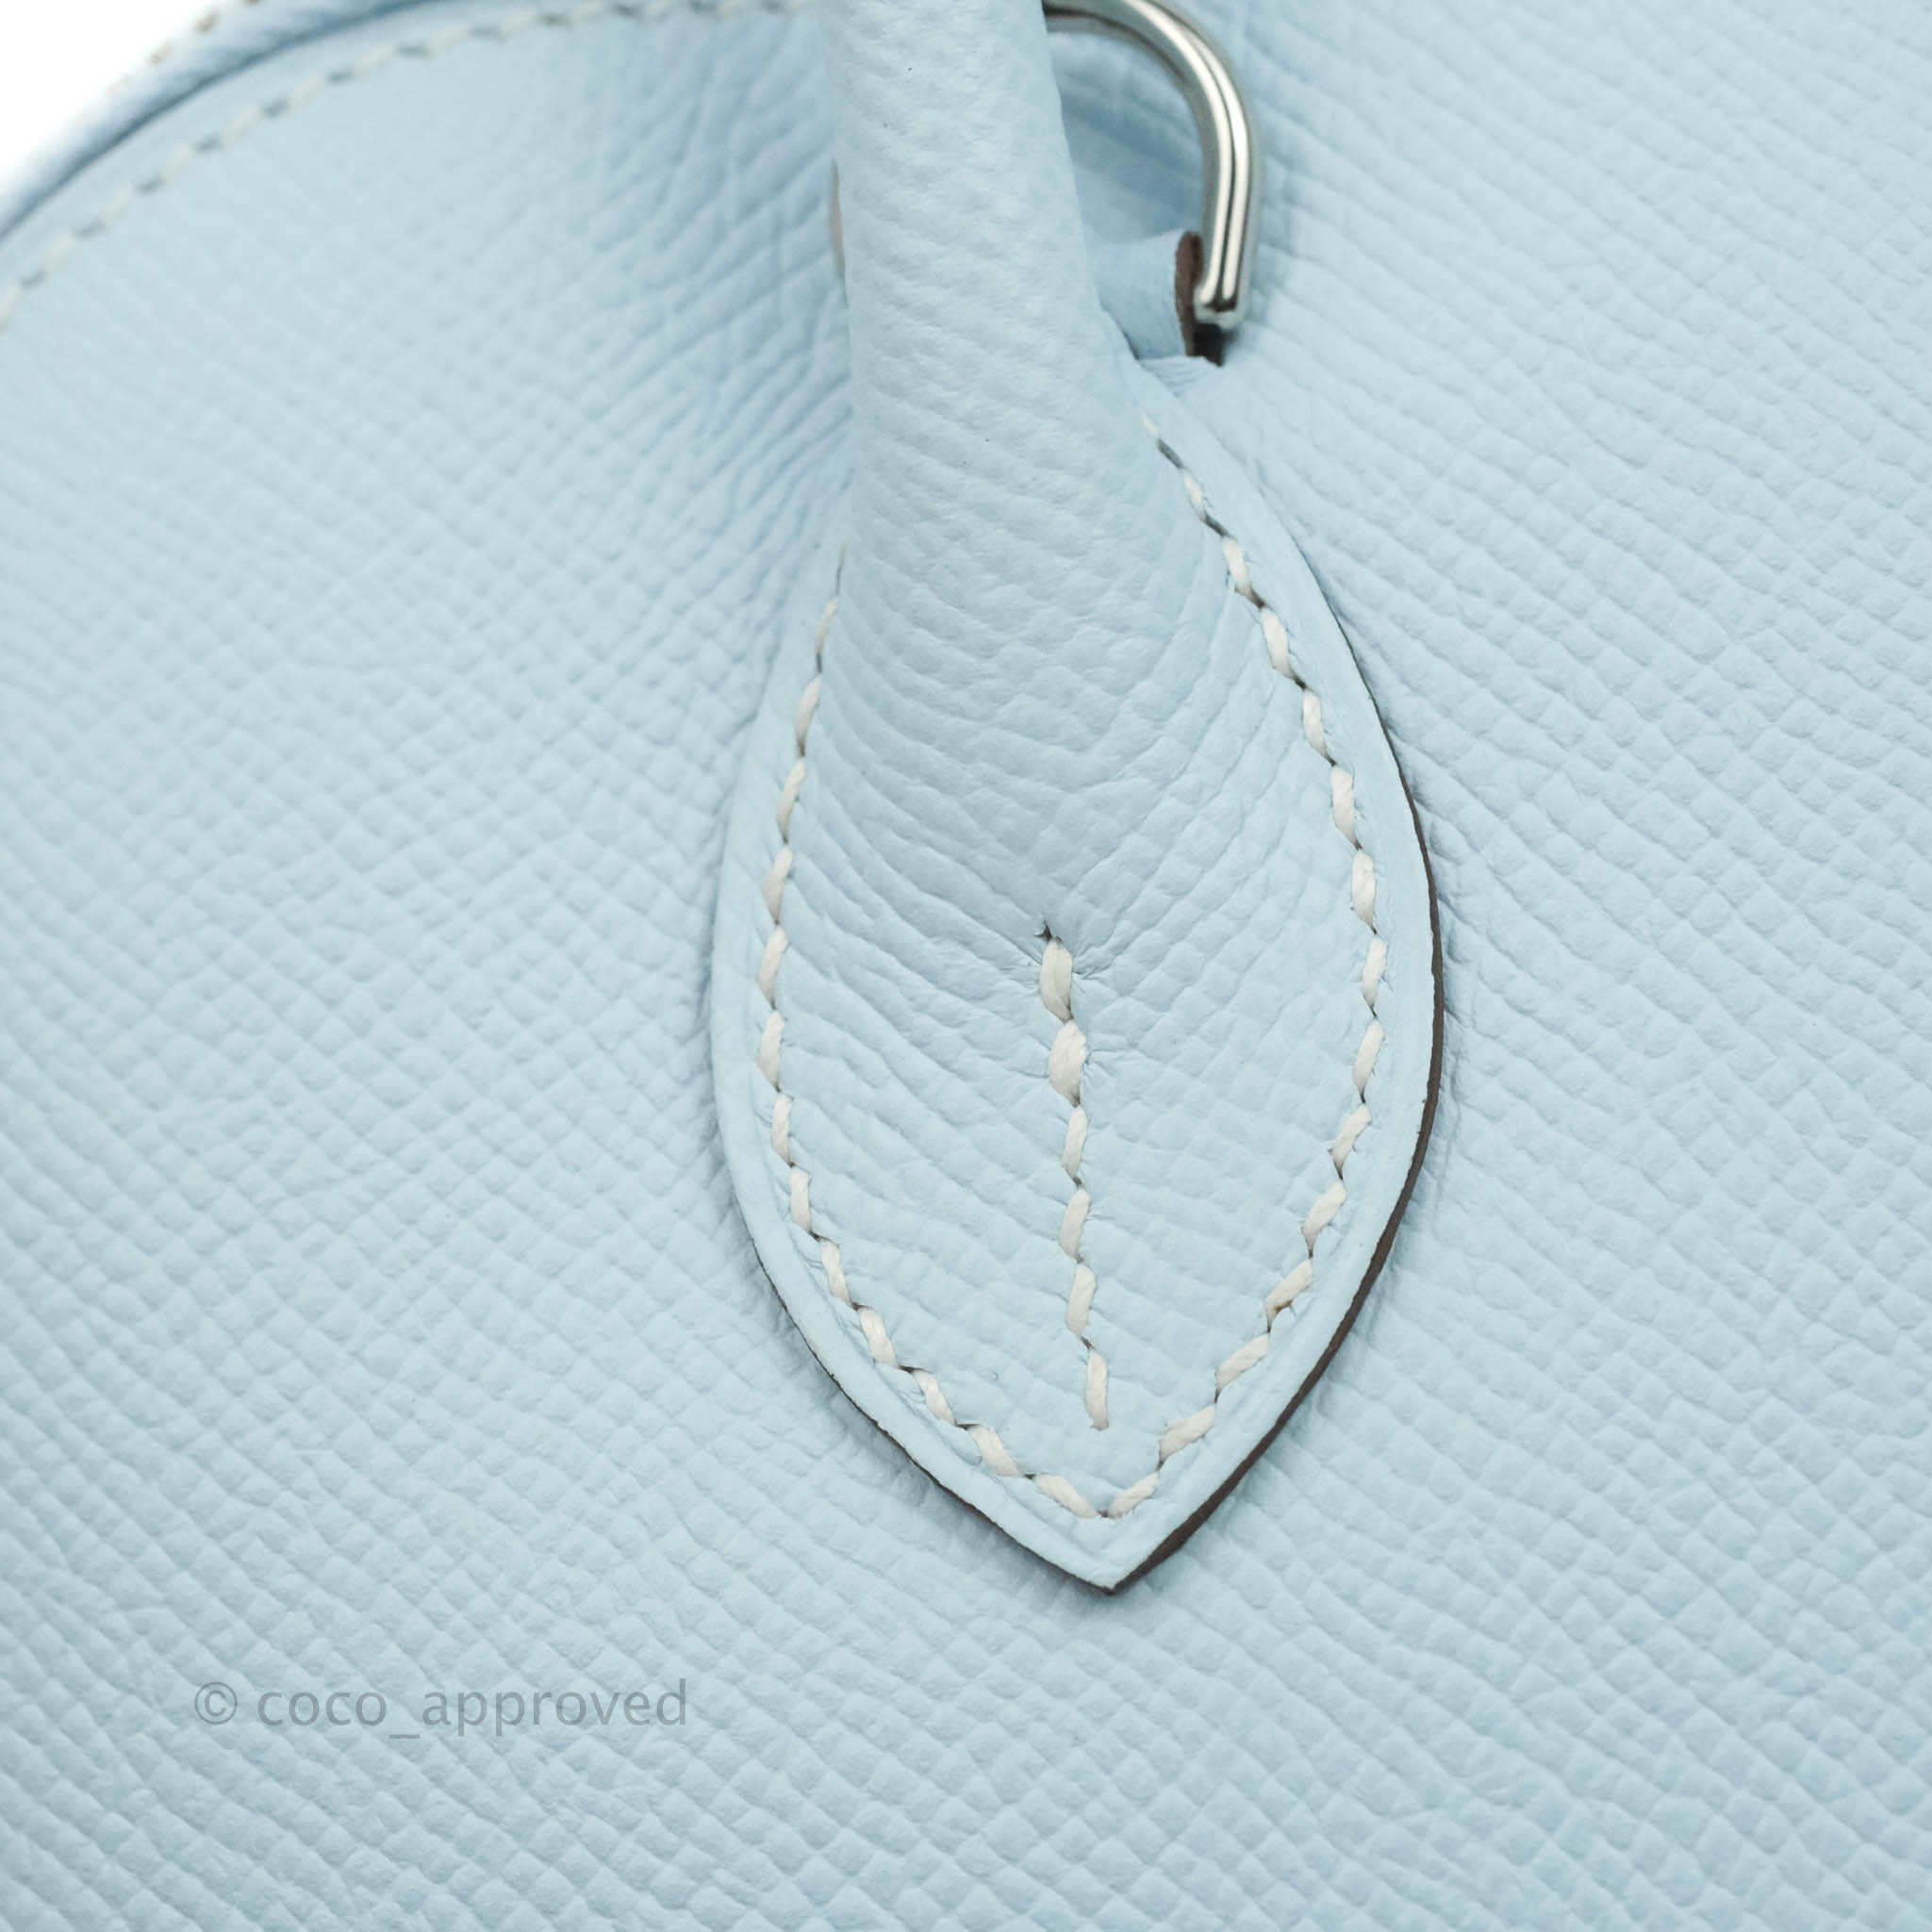 Hermes Bolide Womens Handbags 2021 Ss, Beige, 25